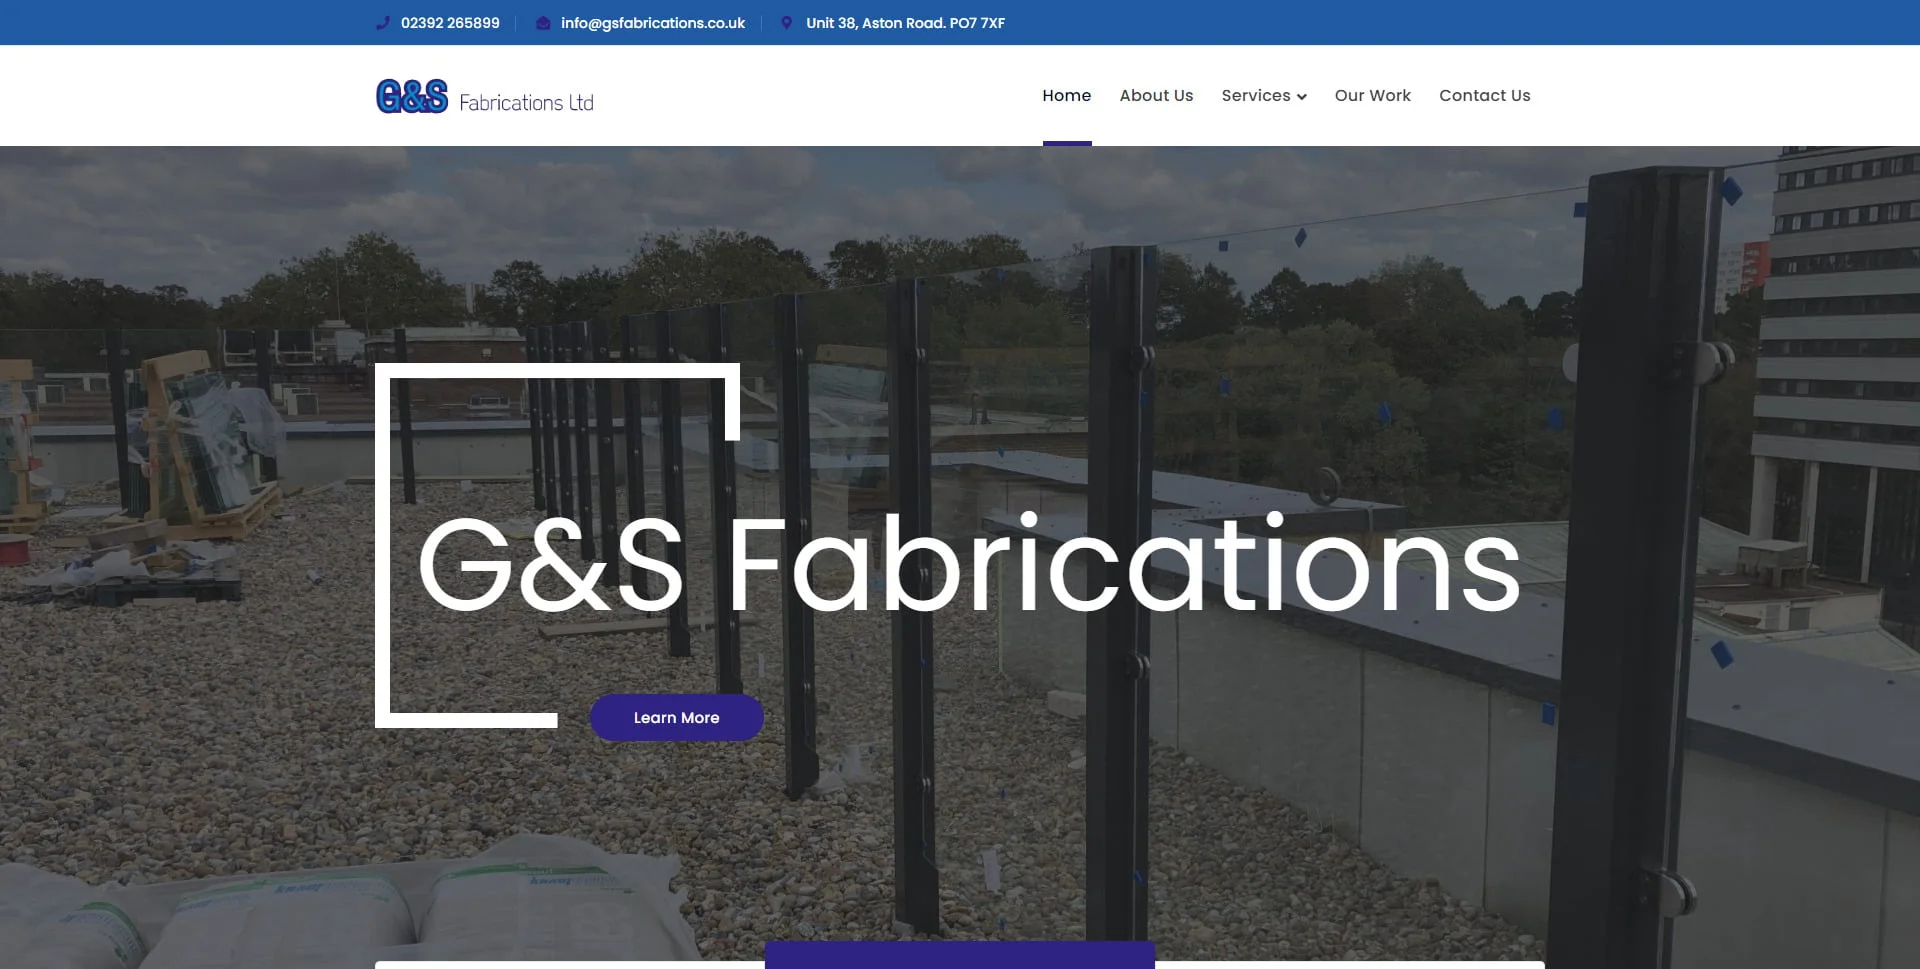 Our Work, Web, App Development &amp; SEO Agency Portsmouth | Creation Web